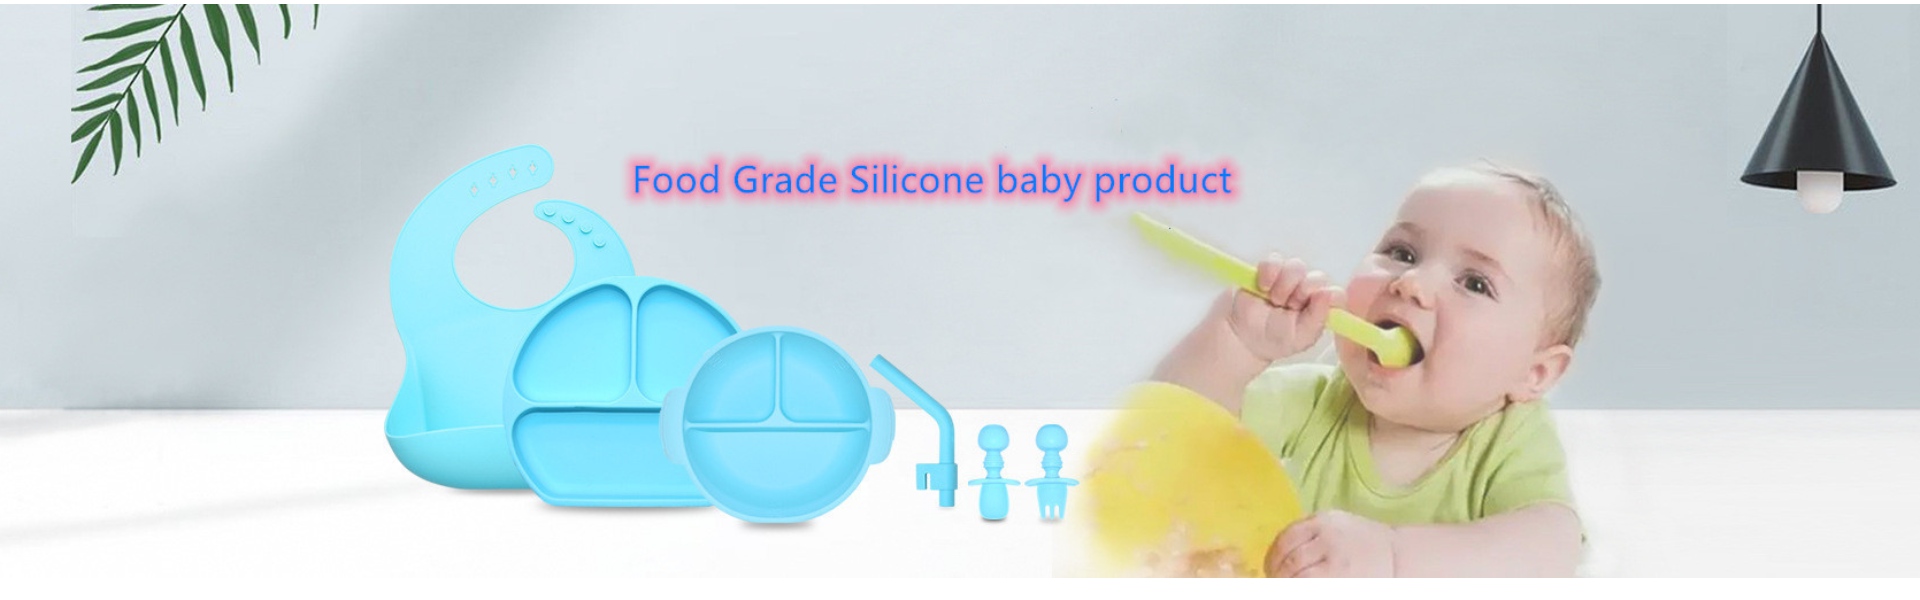 køkkenartikler af silikone, silikone, silikone, babyprodukt,Huizhou Calipolo accessory Ltd